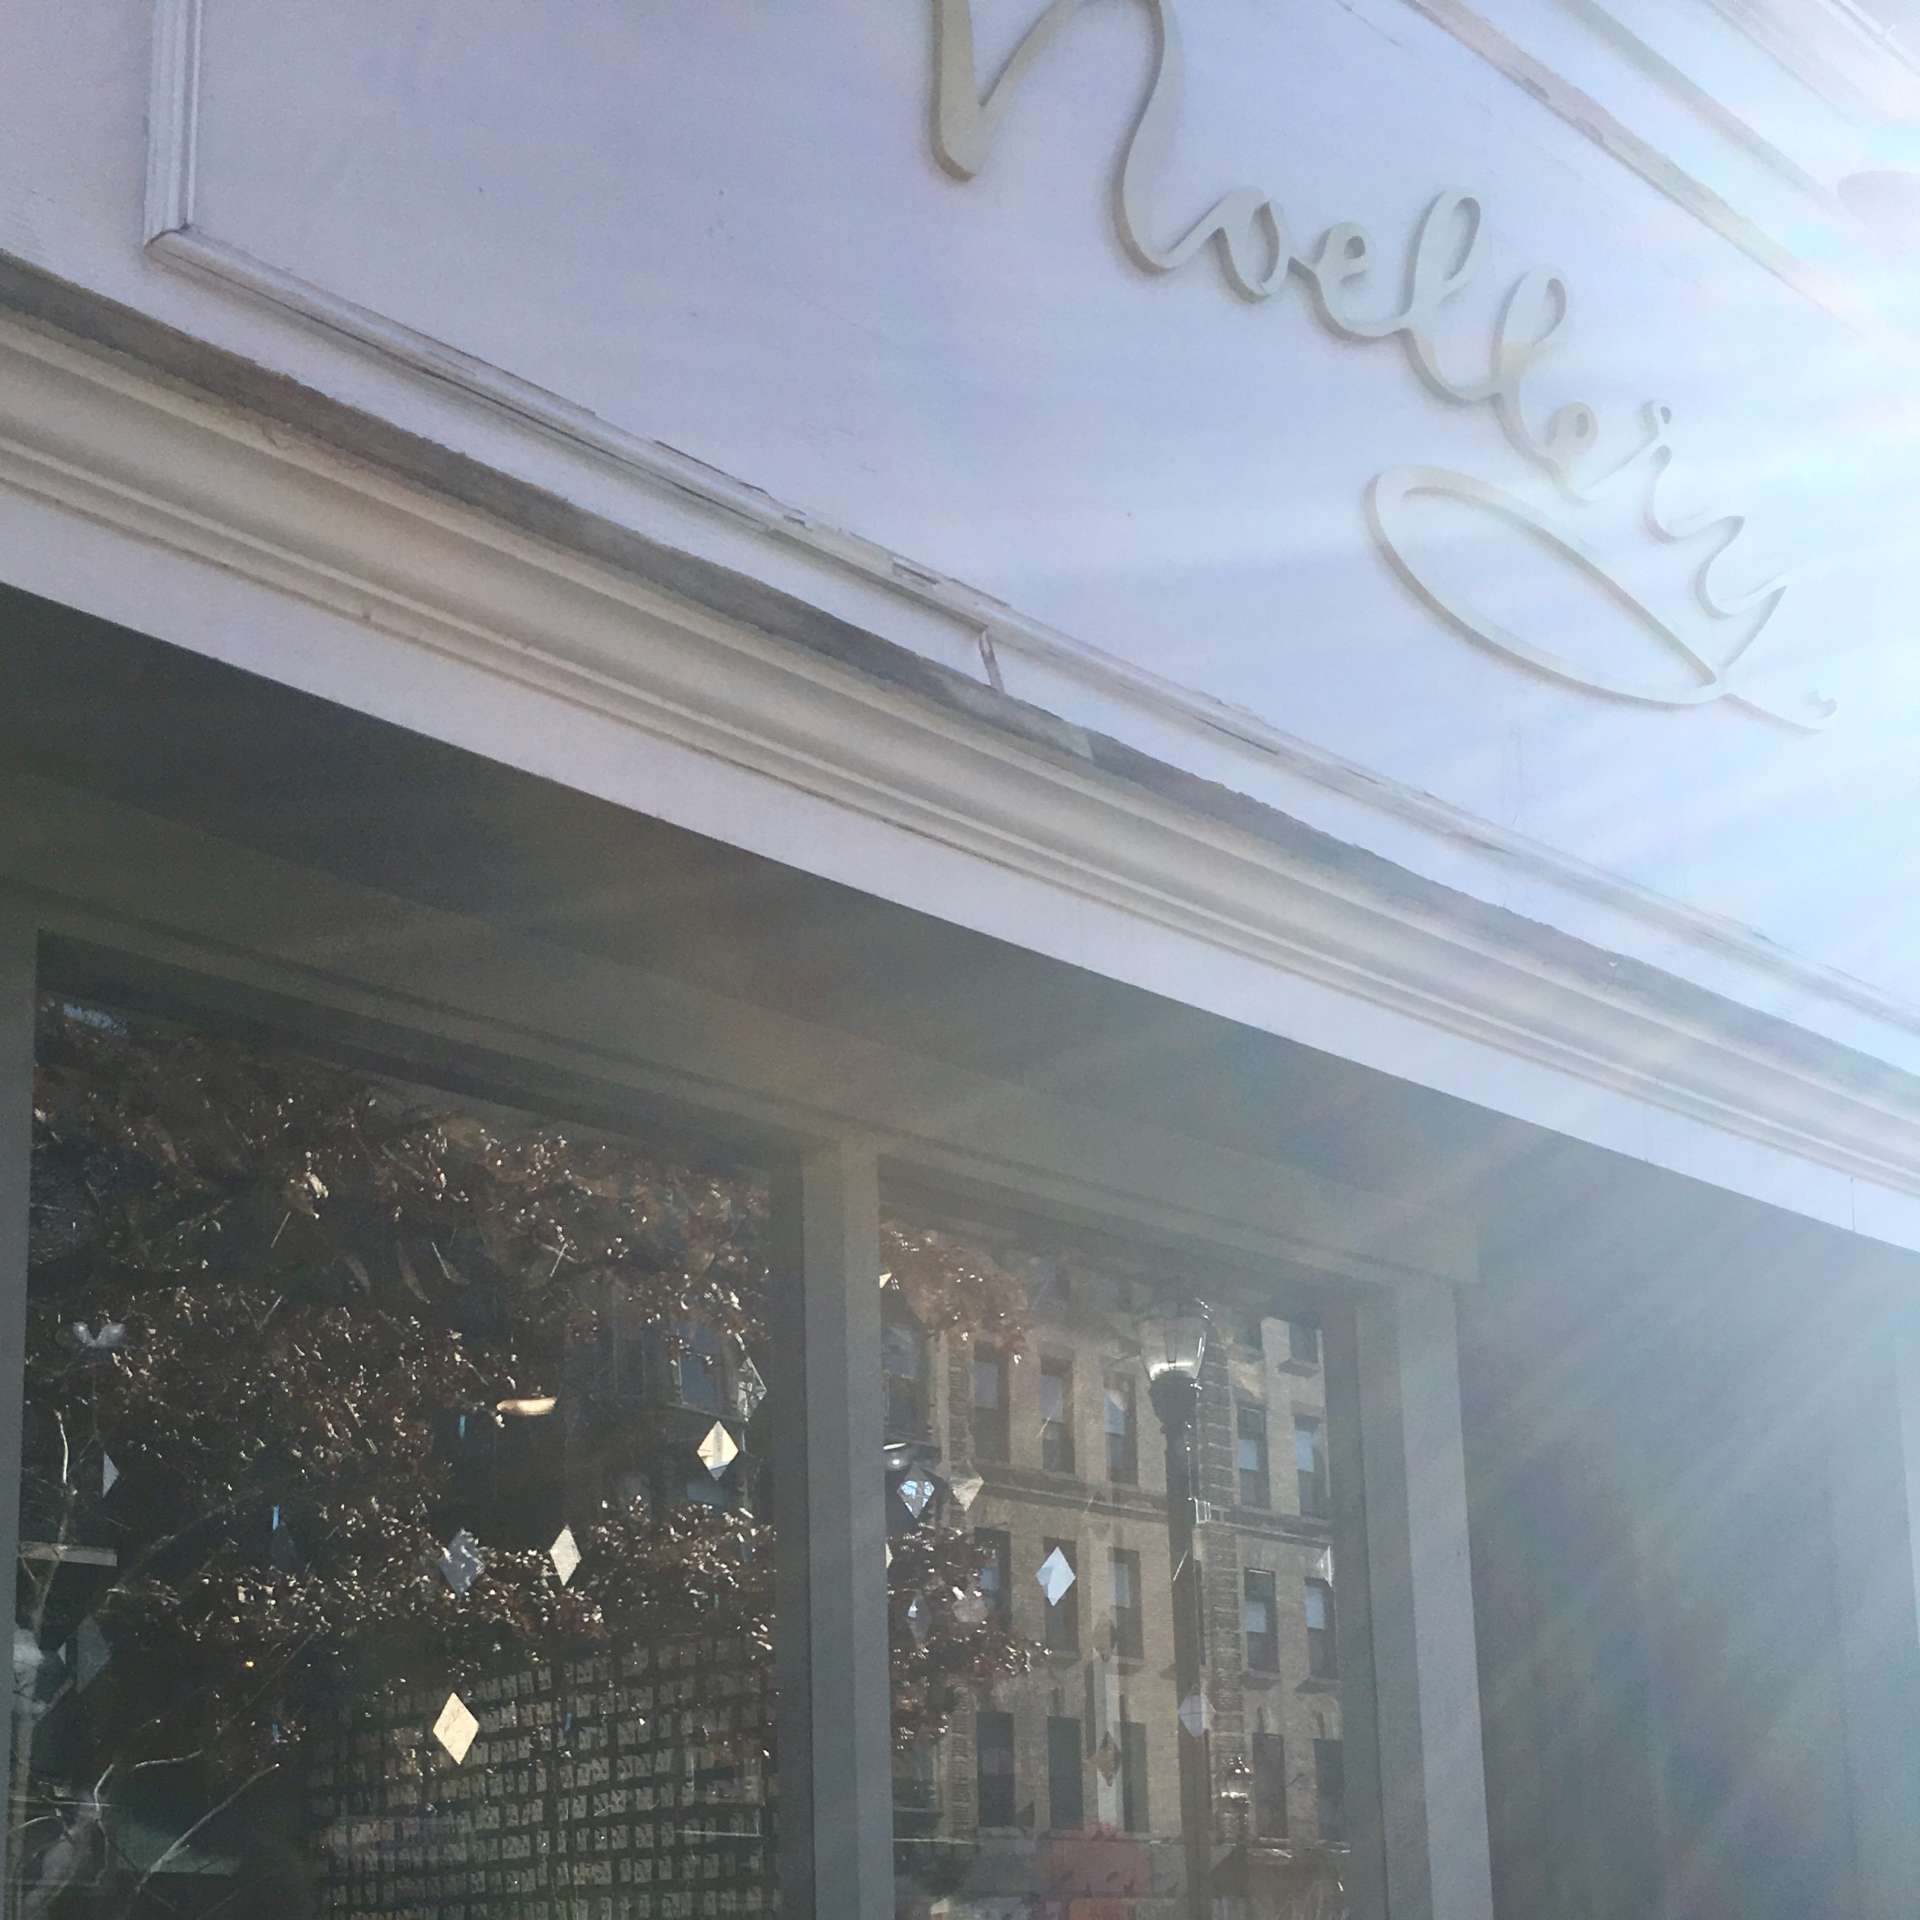 Genna-Rossi-Noellery-Outside-Storefront